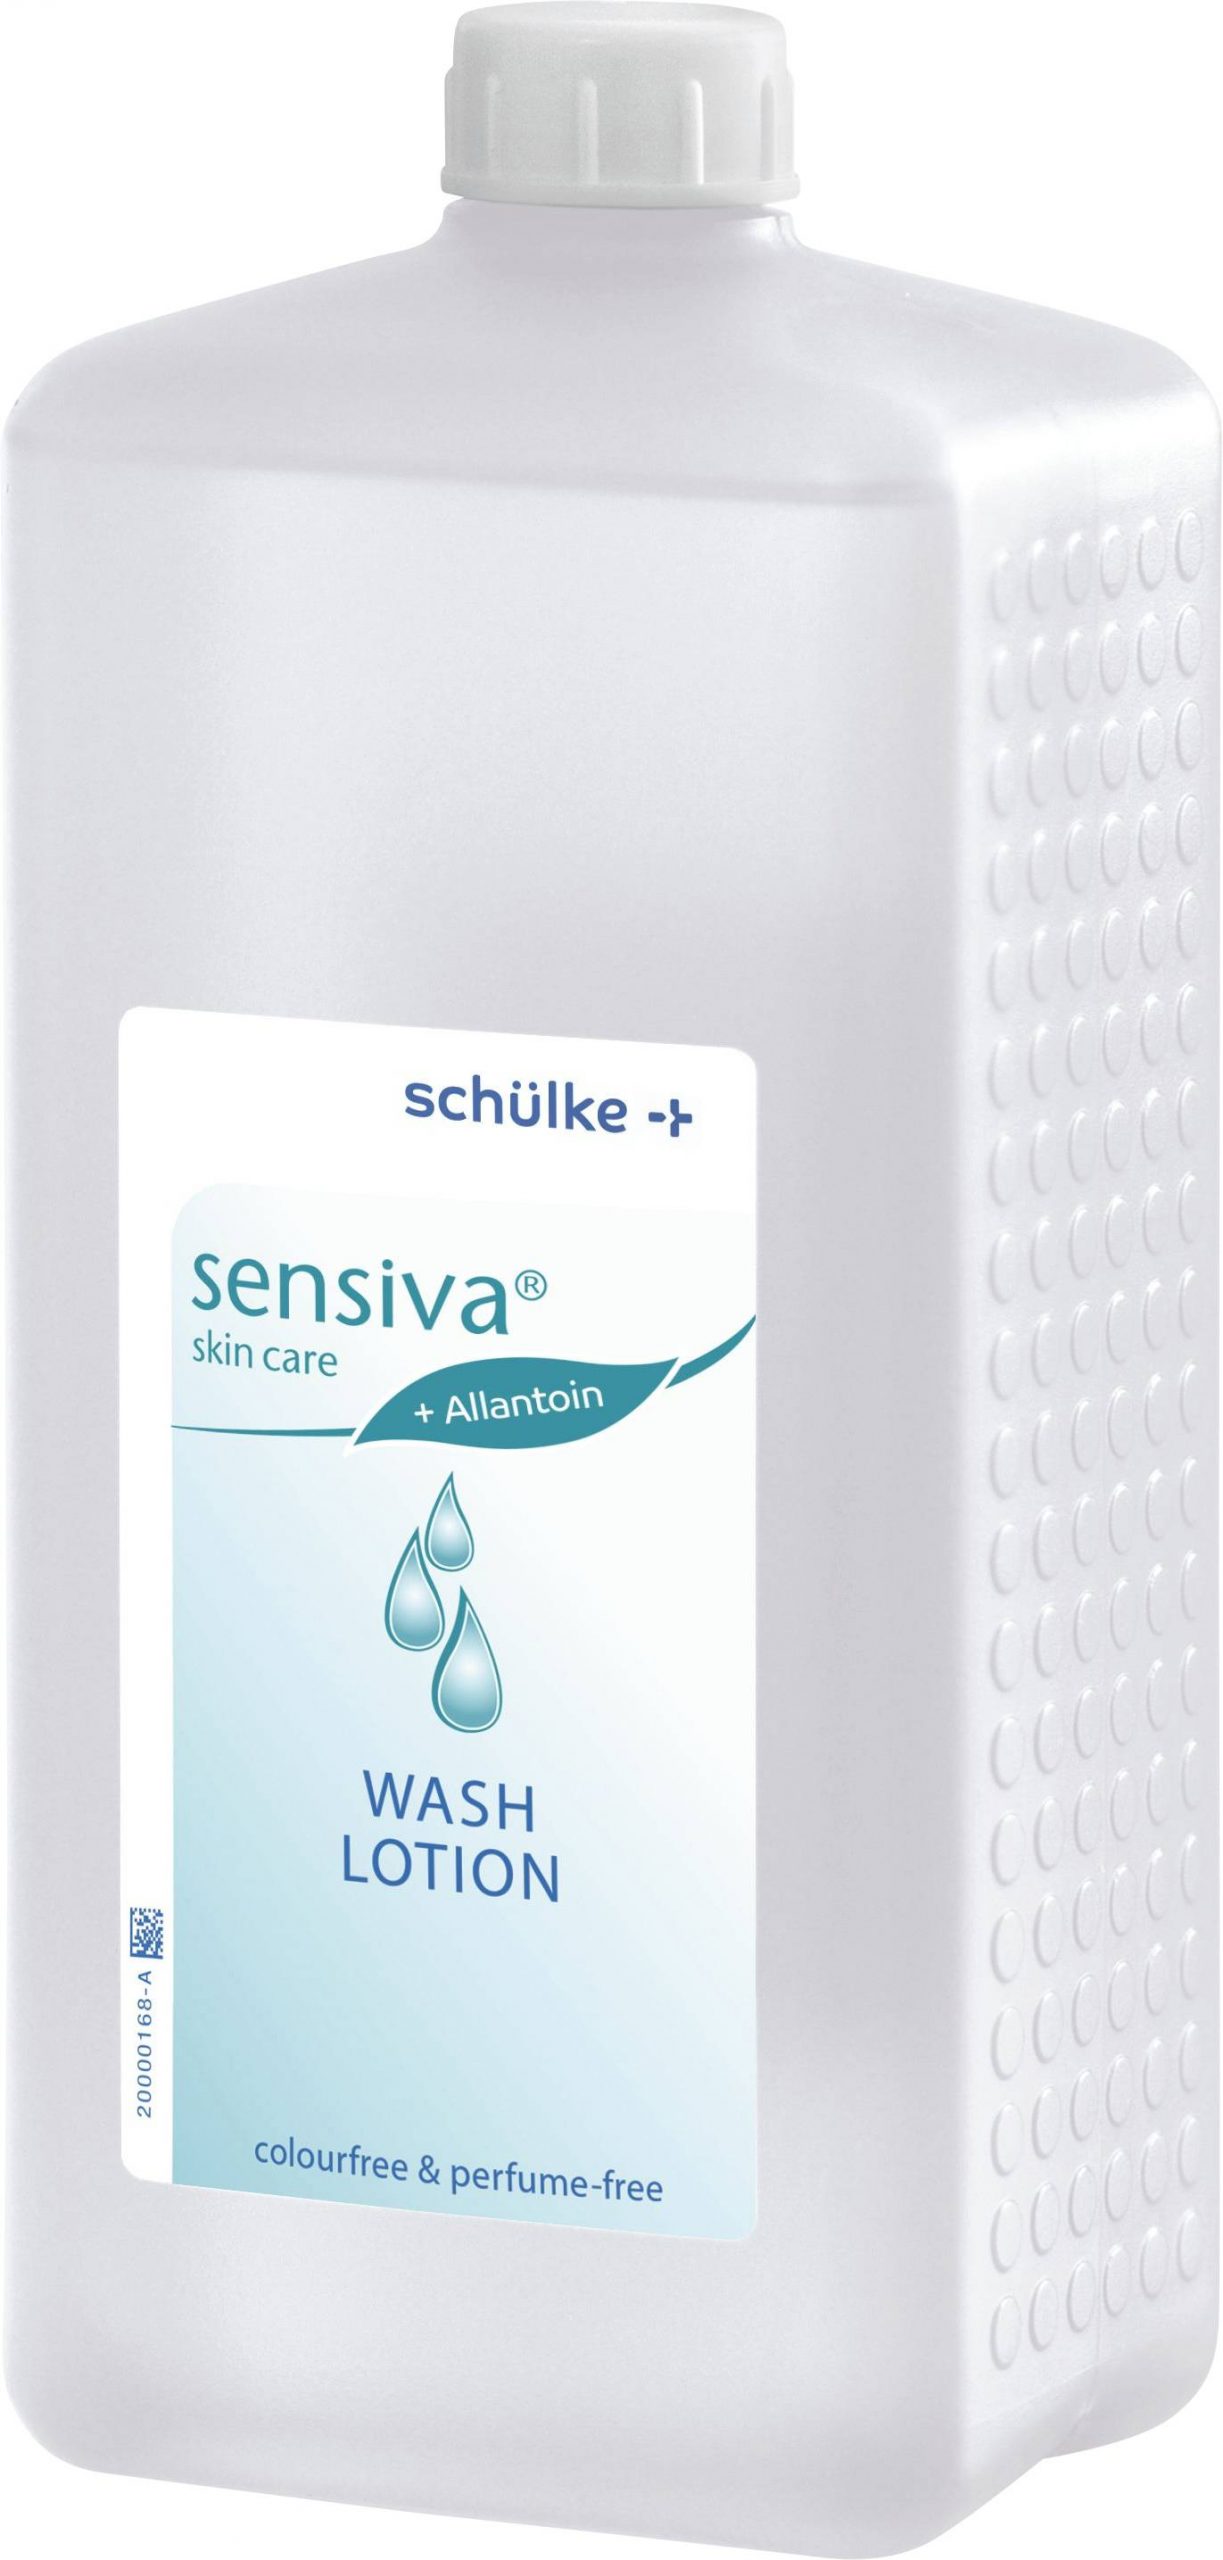 Schülke Sensiva Wash lotion 1 liter